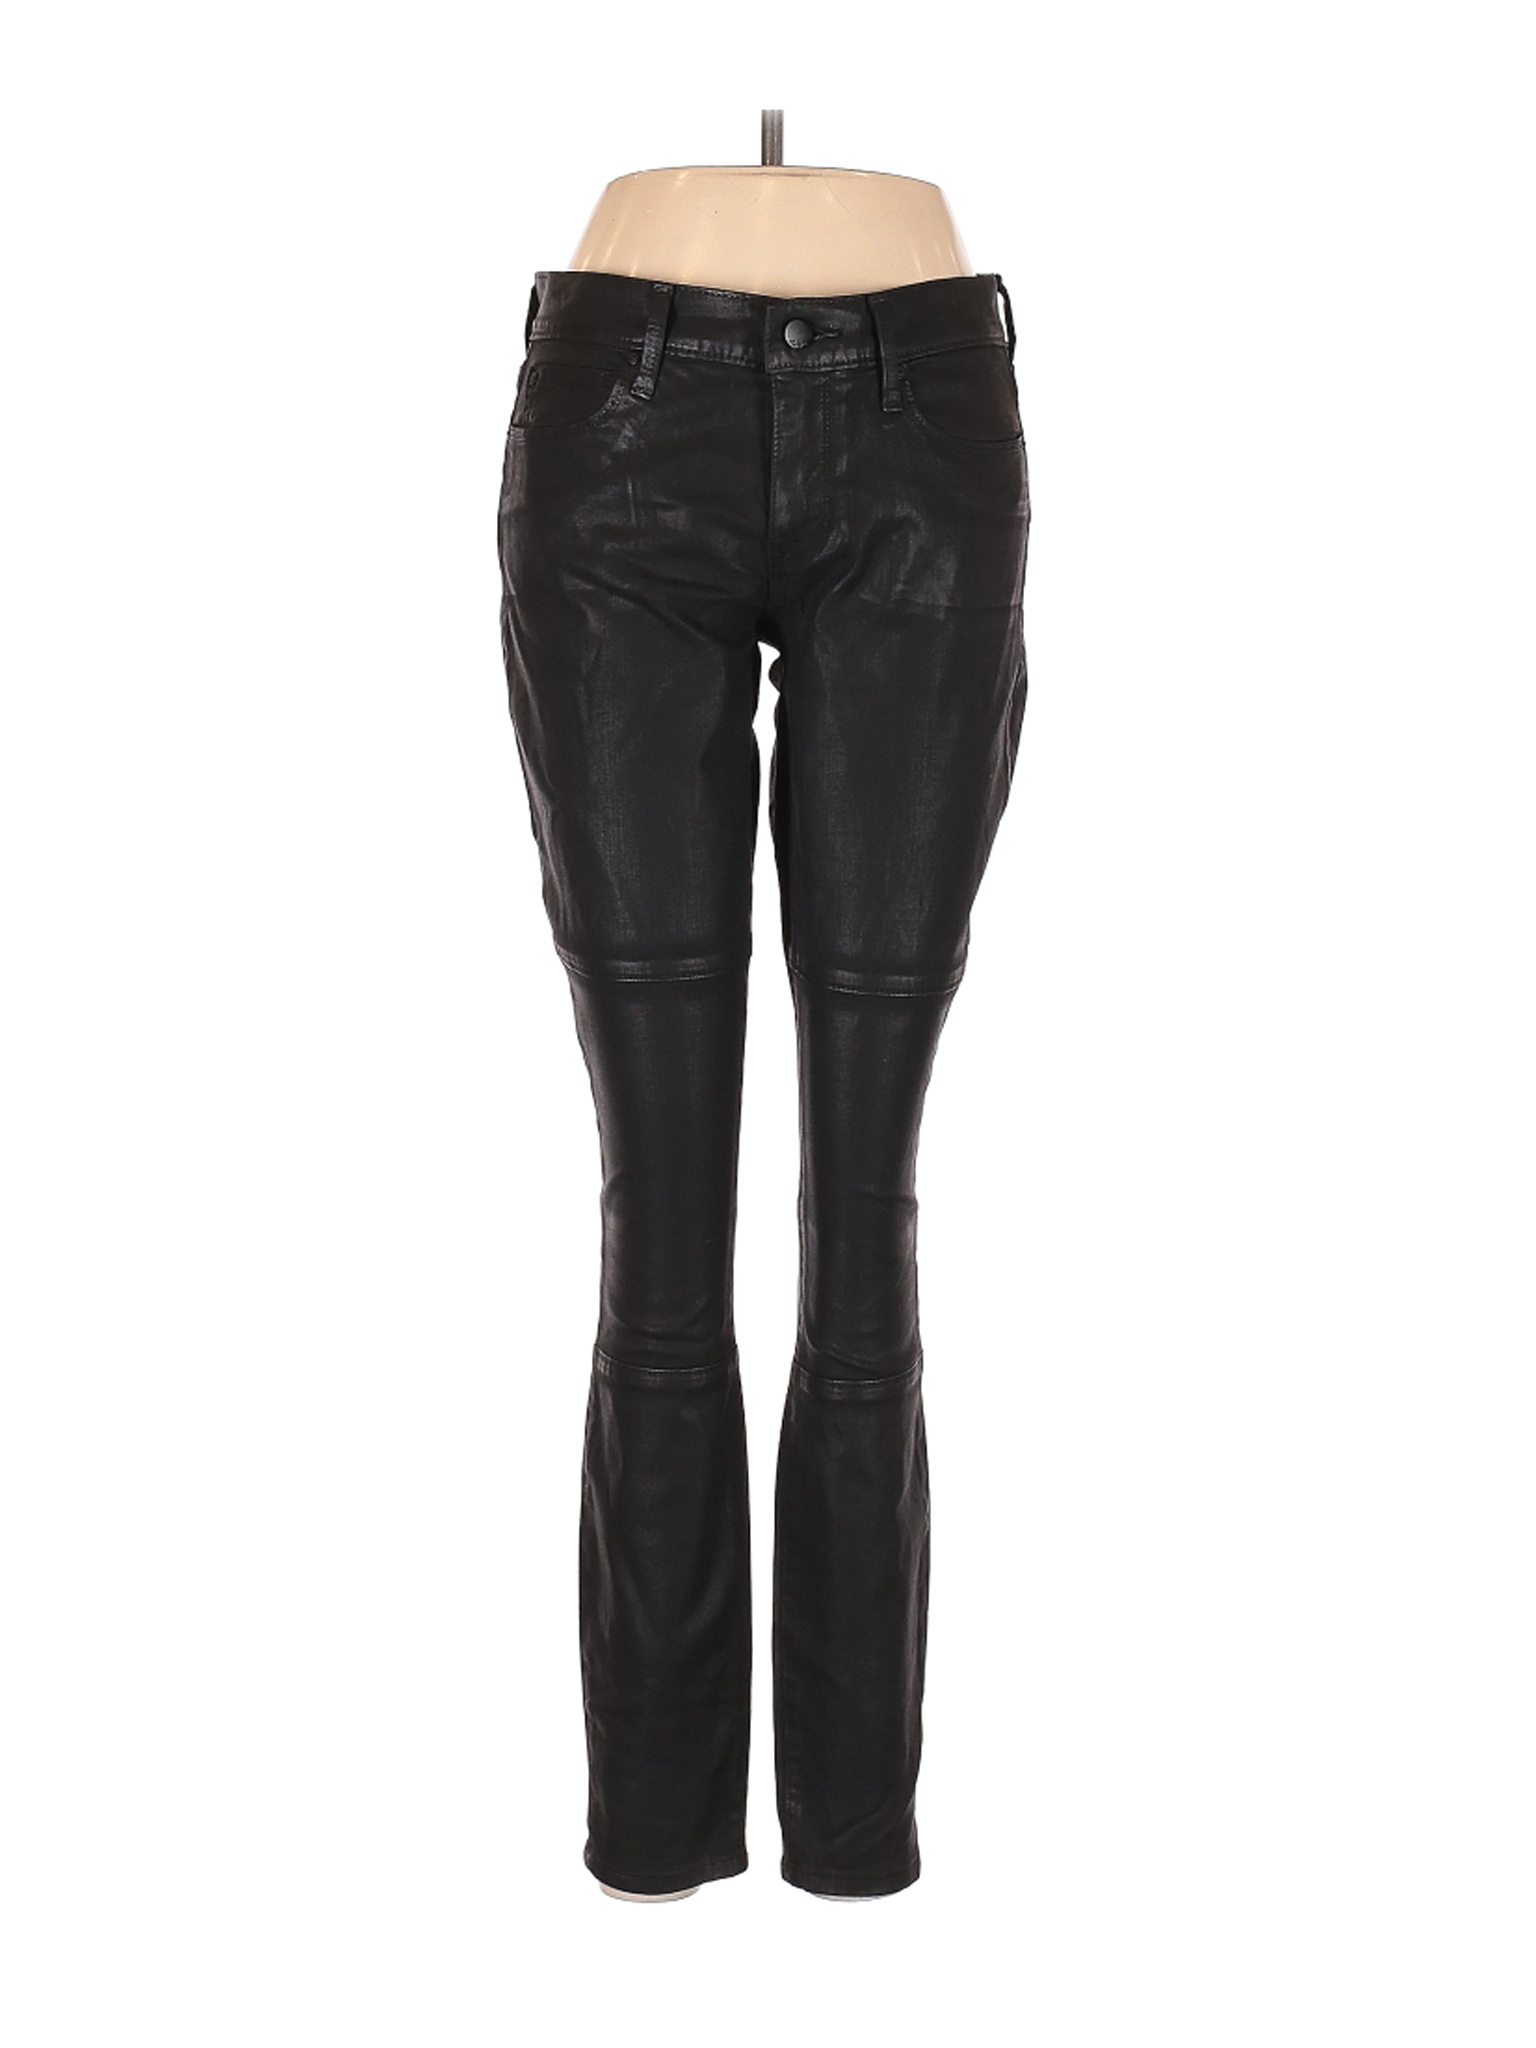 Gap Women Black Faux Leather Pants 27 W Tall | eBay